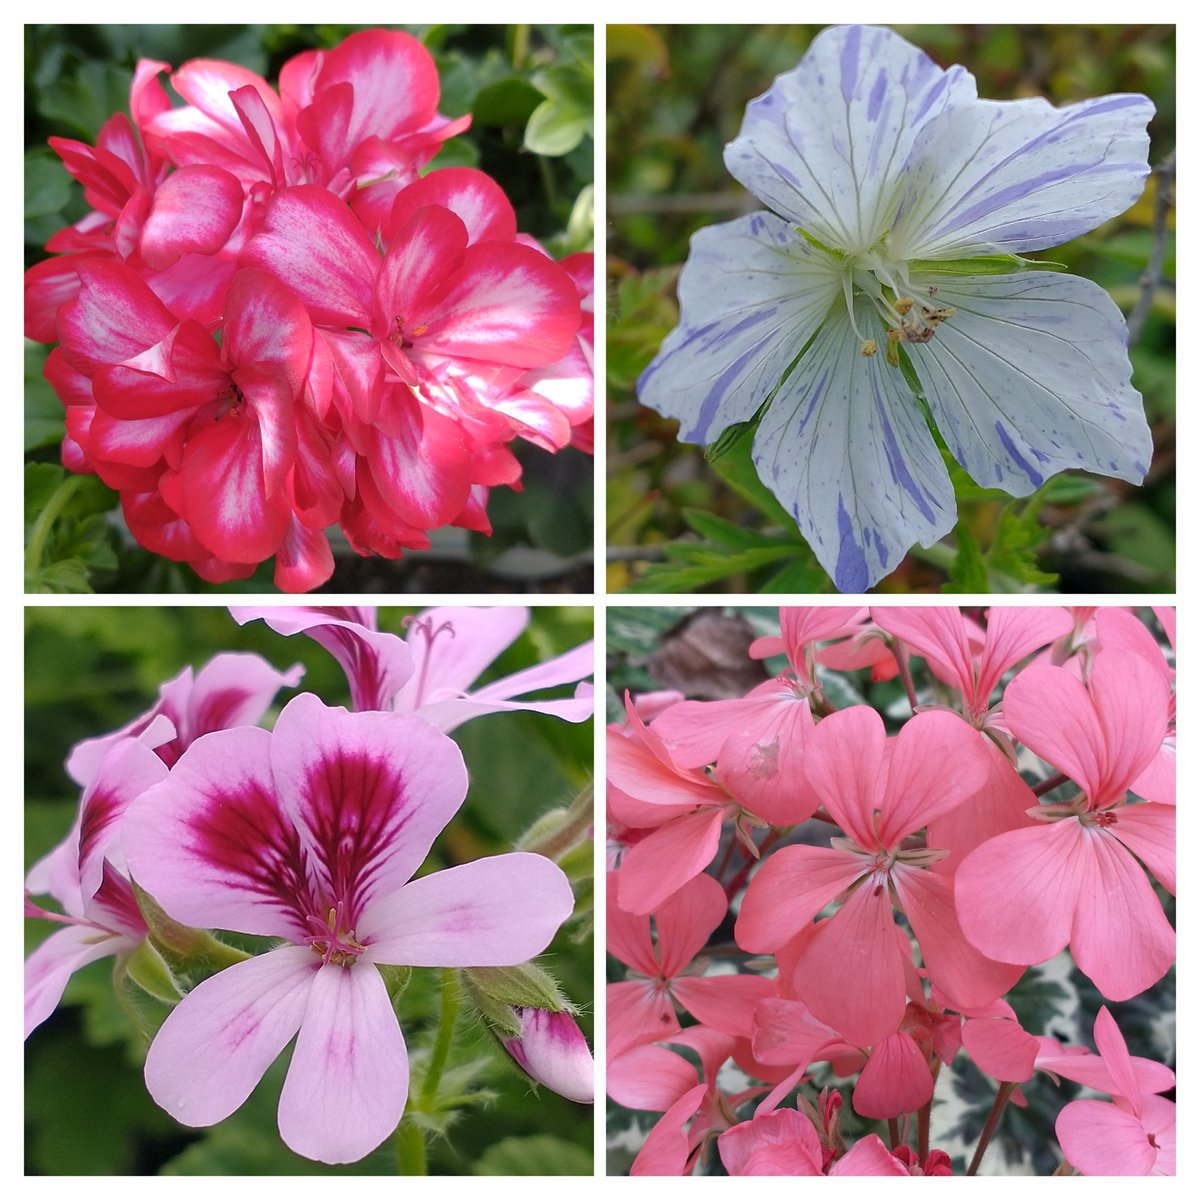 A few types of geraniums for #sevenonsunday 😊 #flowers #blooms #flowersoftwitter #gardeningx #gardeningtwitter #macro